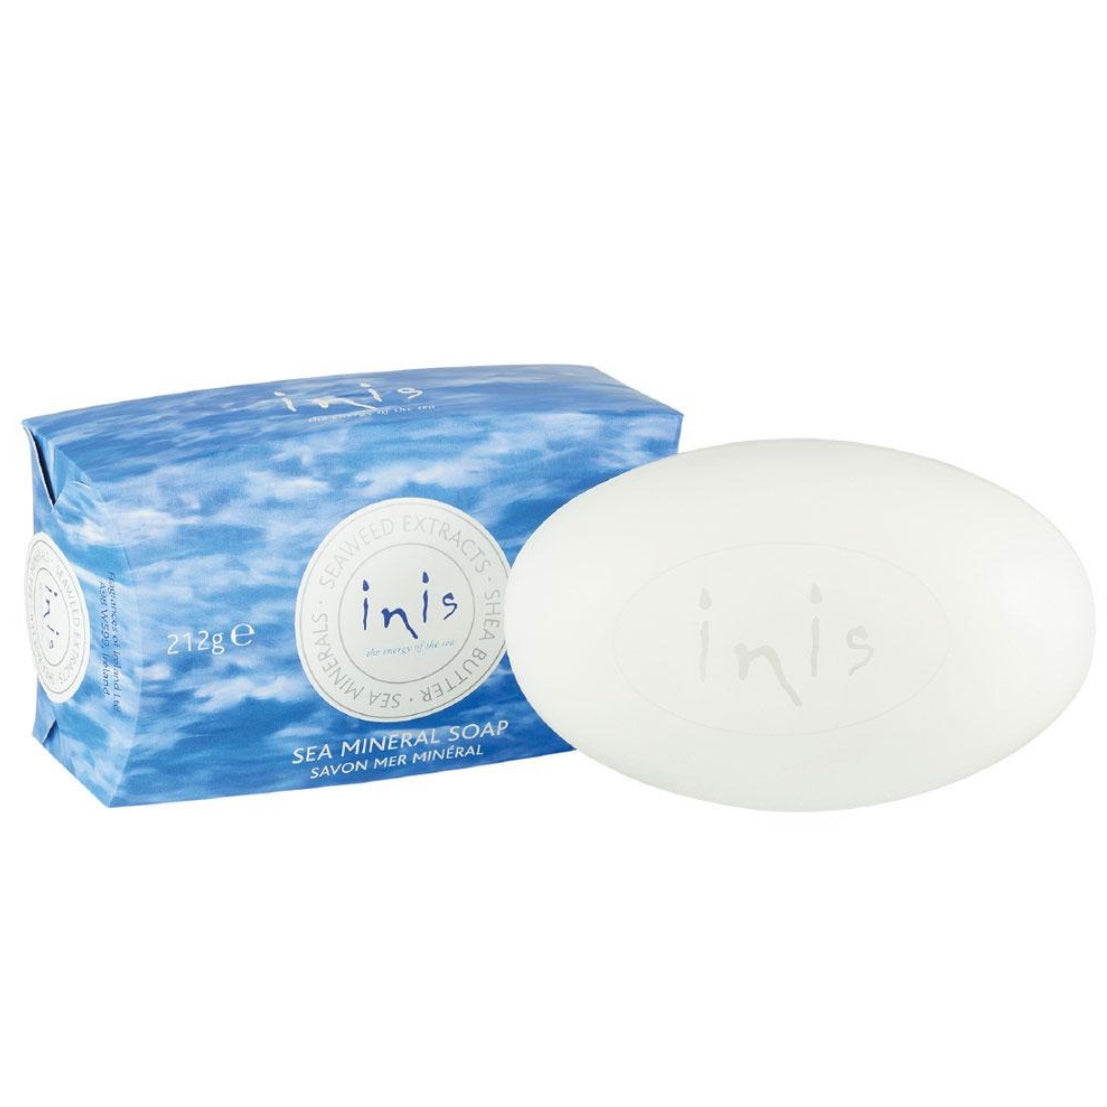 Inis Large Sea Mineral Soap Bar